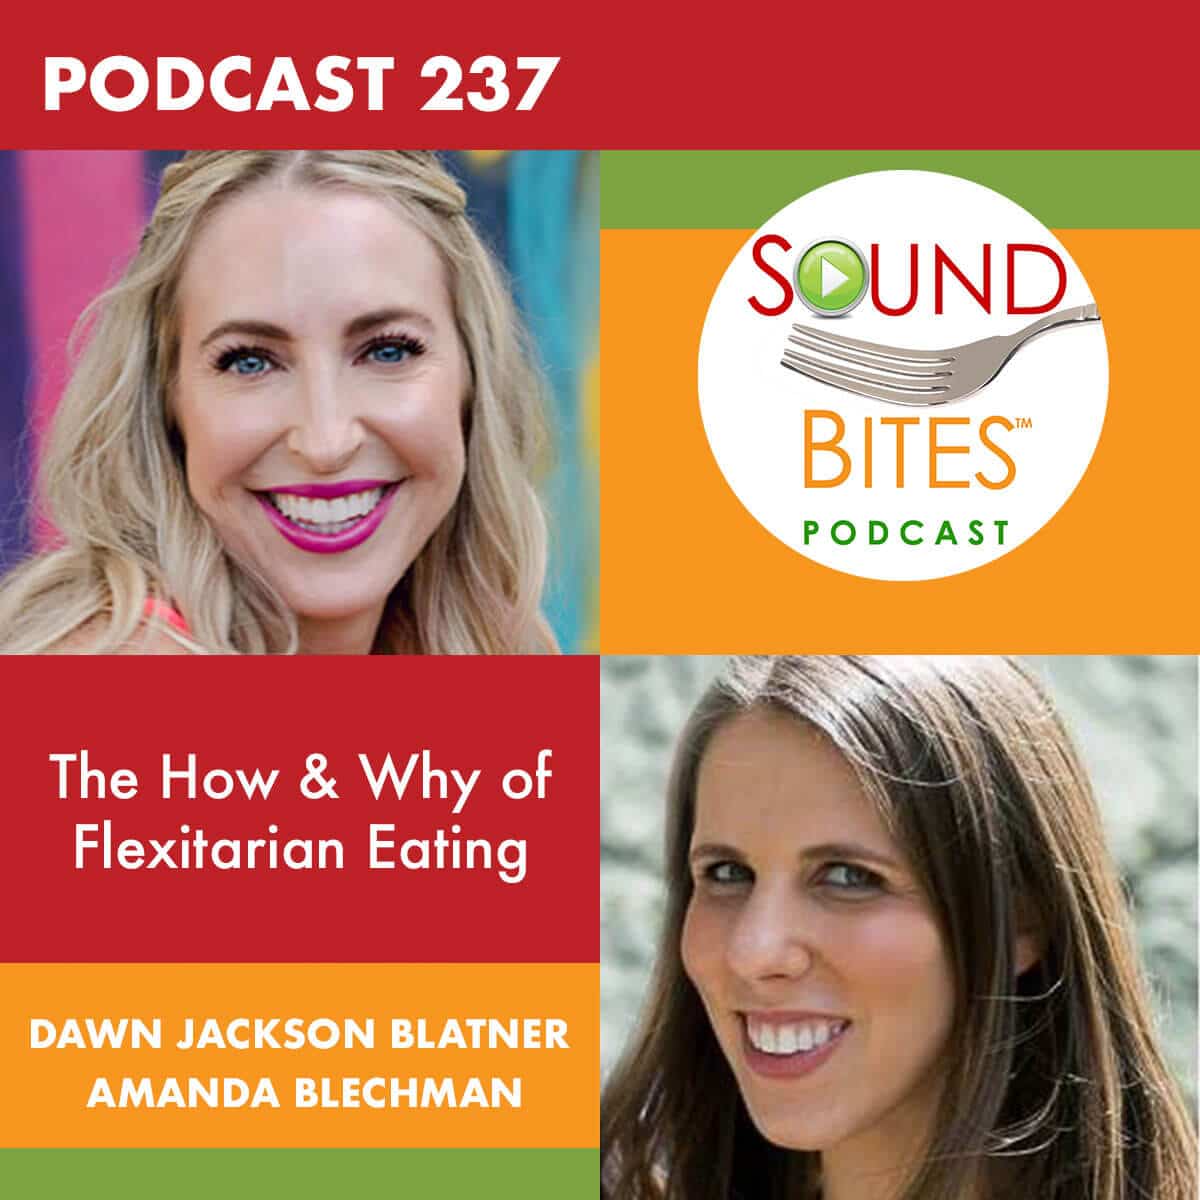 Podcast Episode 237: The How & Why of Flexitarian Eating – Dawn Jackson Blatner & Amanda Blechman